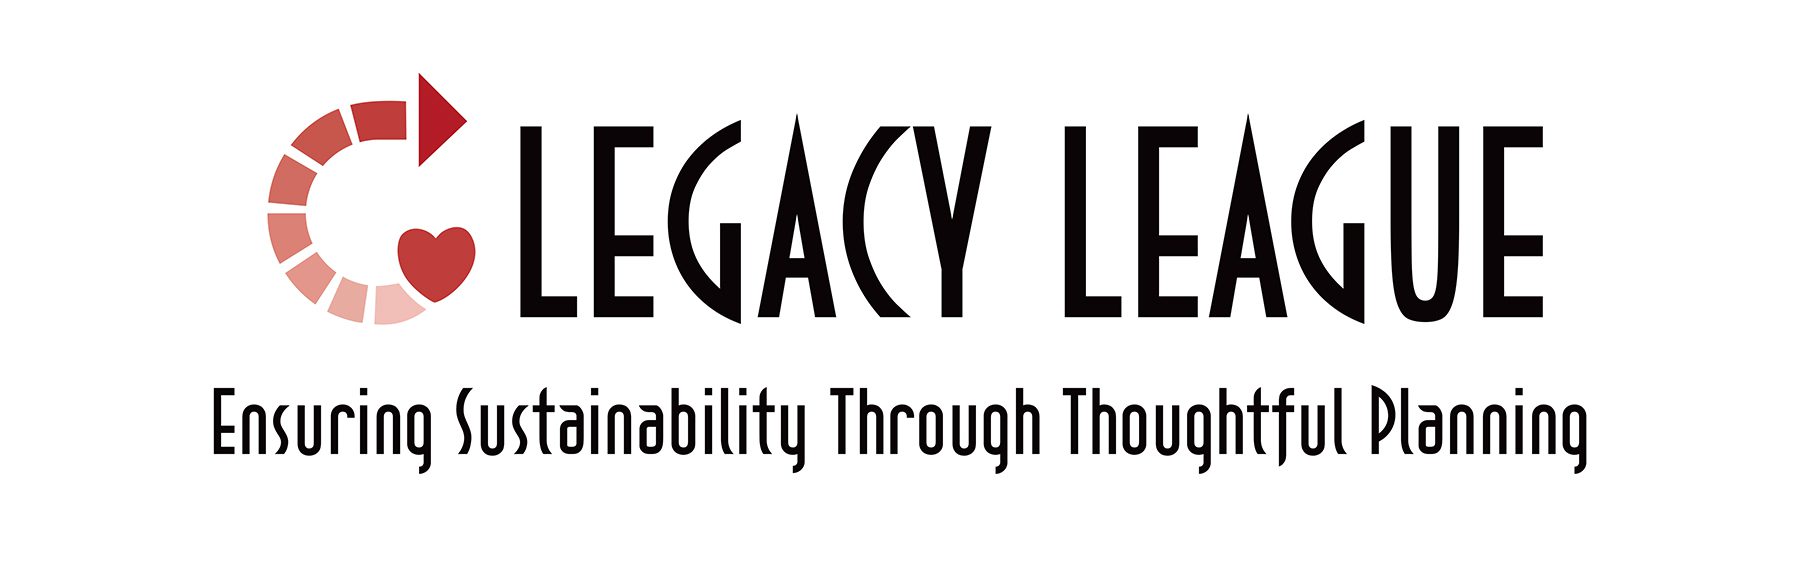 Legacy League logo